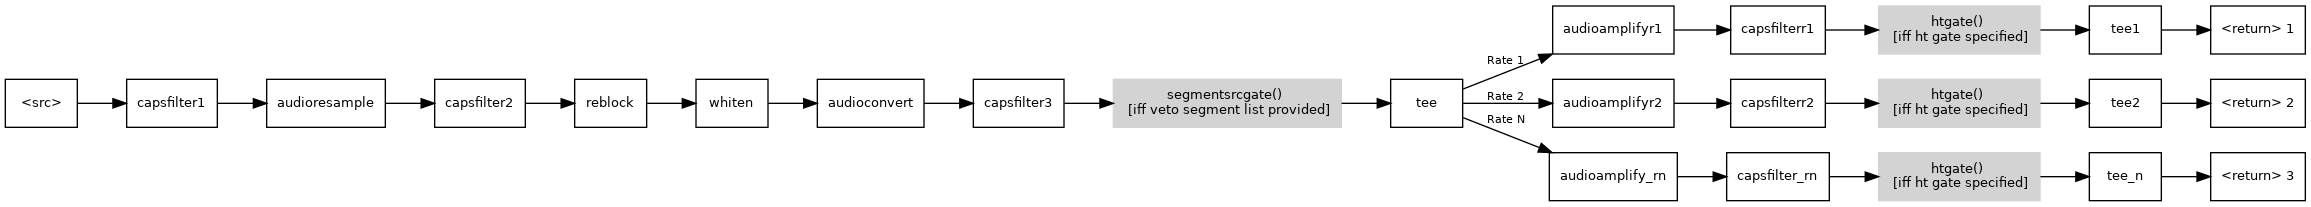 digraph mkbasicsrc {
     rankdir = LR;
     compound=true;
     node [shape=record fontsize=10 fontname="Verdana"];
     edge [fontsize=8 fontname="Verdana"];

     capsfilter1 ;
     audioresample ;
     capsfilter2 ;
     reblock ;
     whiten ;
     audioconvert ;
     capsfilter3 ;
     "segmentsrcgate()" [label="segmentsrcgate() \n [iff veto segment list provided]", style=filled, color=lightgrey];
     tee ;
     audioamplifyr1 ;
     capsfilterr1 ;
     htgater1 [label="htgate() \n [iff ht gate specified]", style=filled, color=lightgrey];
     tee1 ;
     audioamplifyr2 ;
     capsfilterr2 ;
     htgater2 [label="htgate() \n [iff ht gate specified]", style=filled, color=lightgrey];
     tee2 ;
     audioamplify_rn ;
     capsfilter_rn ;
     htgate_rn [style=filled, color=lightgrey, label="htgate() \n [iff ht gate specified]"];
     tee ;

     // nodes

     "\<src\>" -> capsfilter1 -> audioresample;
     audioresample -> capsfilter2;
     capsfilter2 -> reblock;
     reblock -> whiten;
     whiten -> audioconvert;
     audioconvert -> capsfilter3;
     capsfilter3 -> "segmentsrcgate()";
     "segmentsrcgate()" -> tee;

     tee -> audioamplifyr1 [label="Rate 1"];
     audioamplifyr1 -> capsfilterr1;
     capsfilterr1 -> htgater1;
     htgater1 -> tee1 -> "\<return\> 1";

     tee -> audioamplifyr2 [label="Rate 2"];
     audioamplifyr2 -> capsfilterr2;
     capsfilterr2 -> htgater2;
     htgater2 -> tee2 -> "\<return\> 2";

     tee ->  audioamplify_rn [label="Rate N"];
     audioamplify_rn -> capsfilter_rn;
     capsfilter_rn -> htgate_rn;
     htgate_rn -> tee_n -> "\<return\> 3";
}